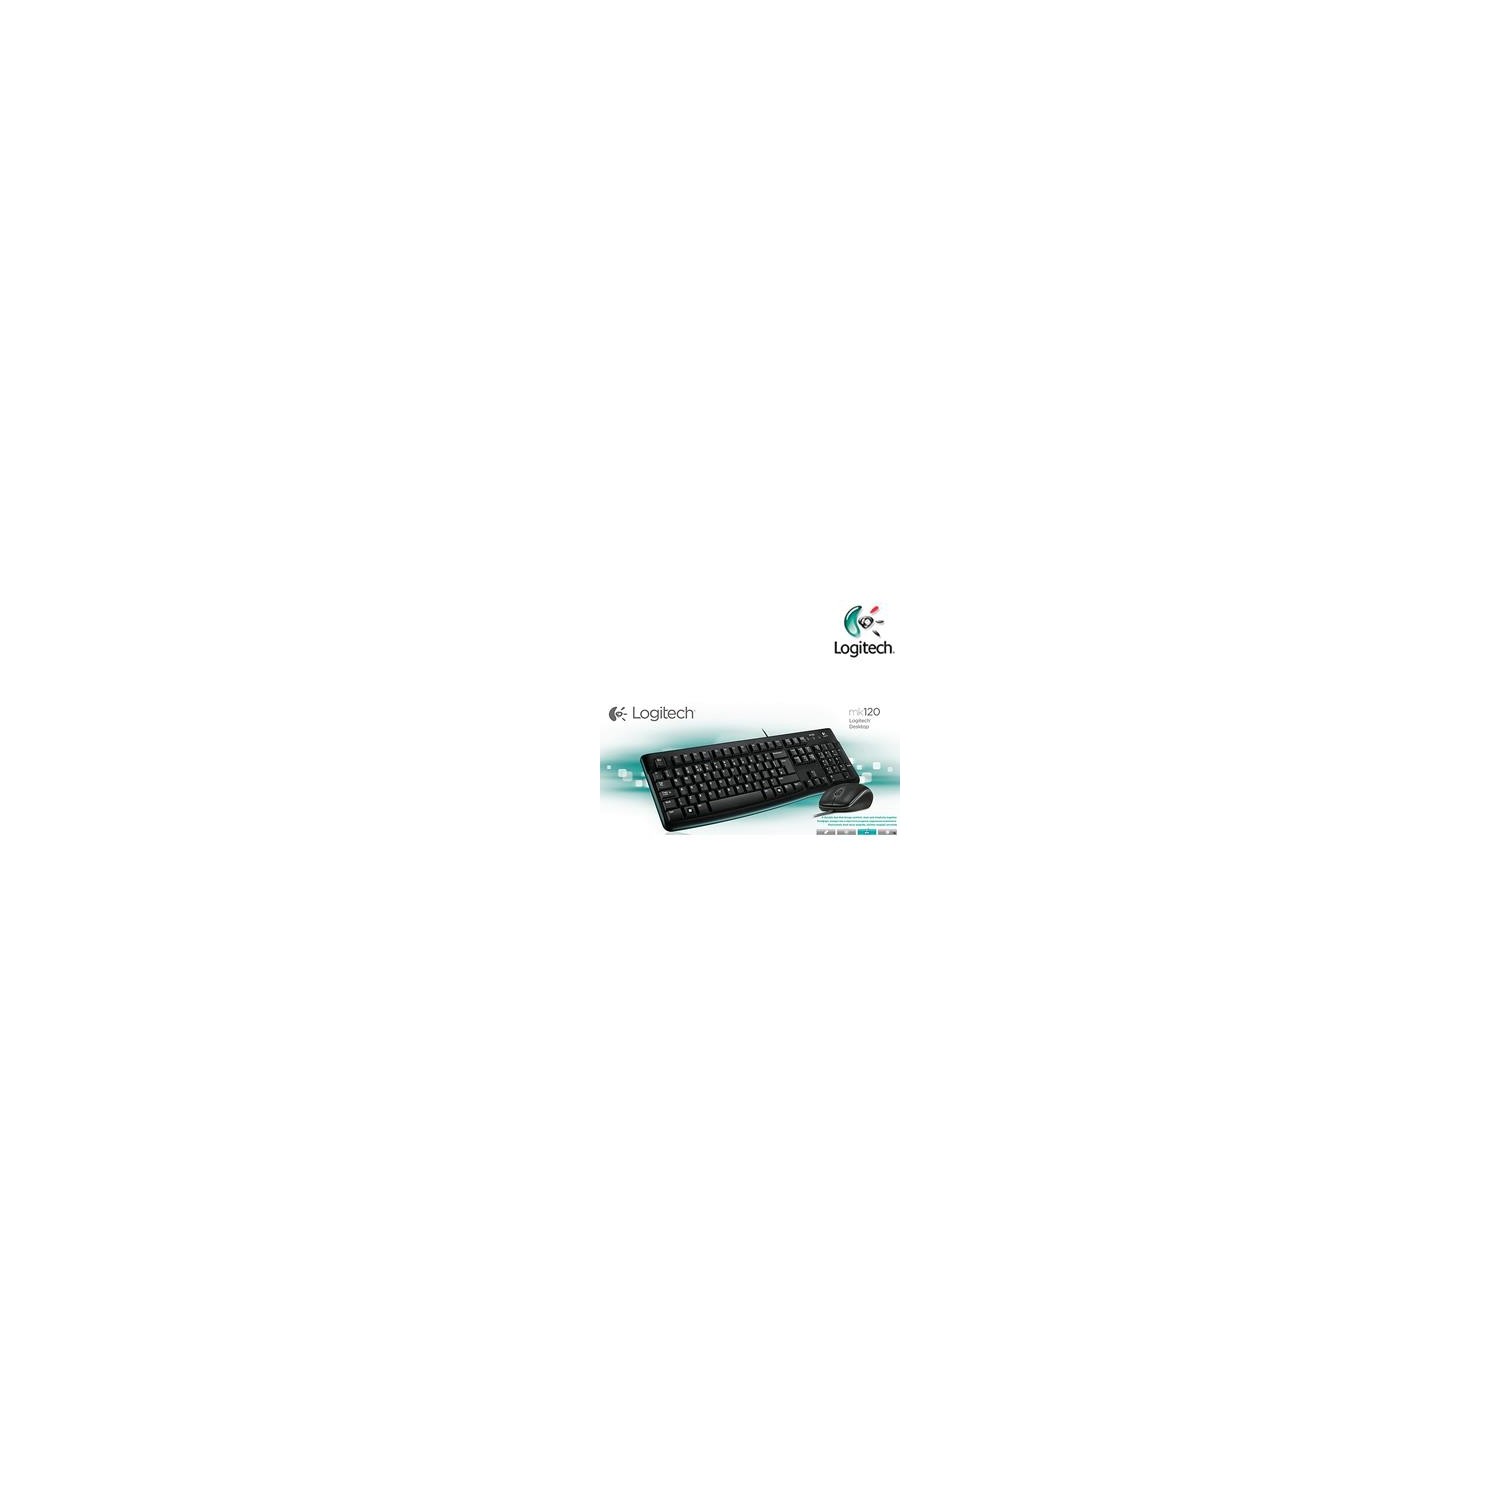 Logitech MK120 USB Keyboard & Mouse Combo 920-002565, New